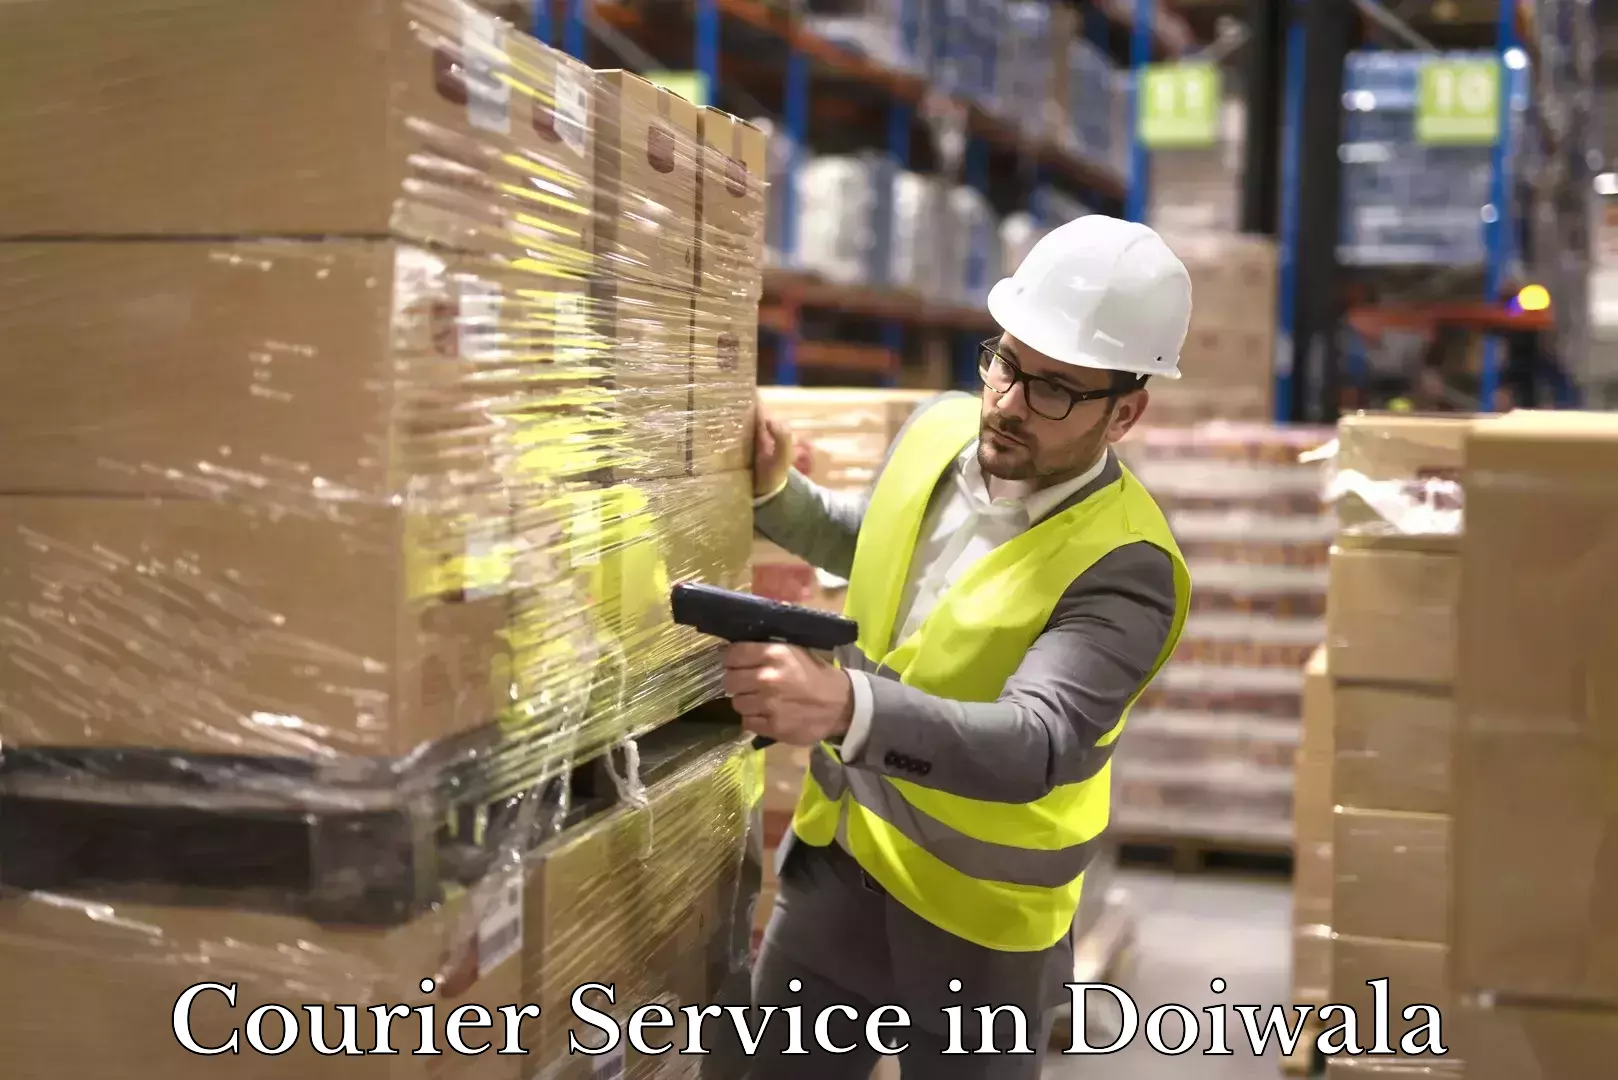 Courier service comparison in Doiwala